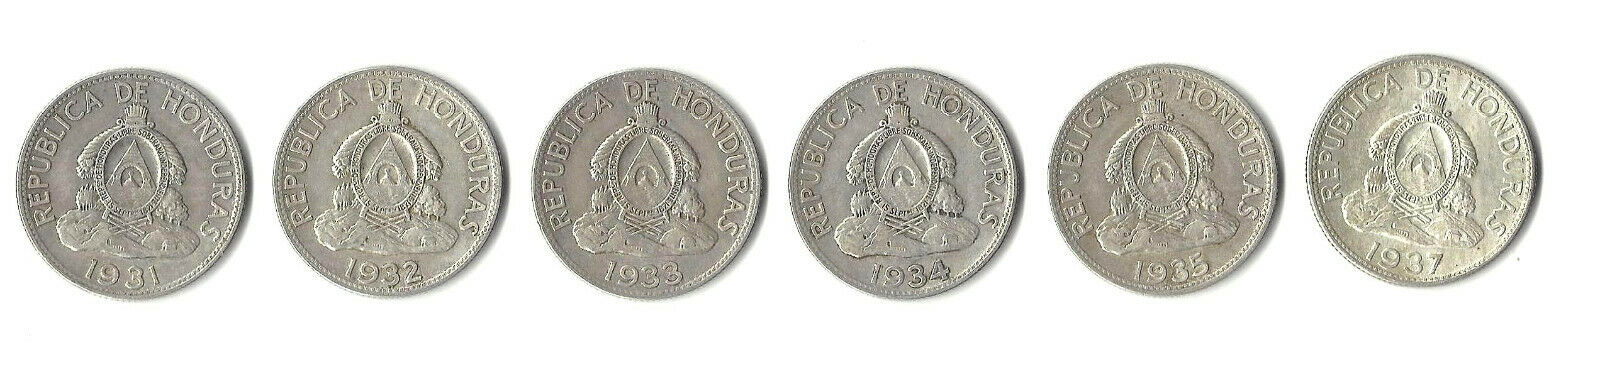 .900 Fine Silver Lempira Coins – Complete Set Of Bambas 1931-37   Km 75